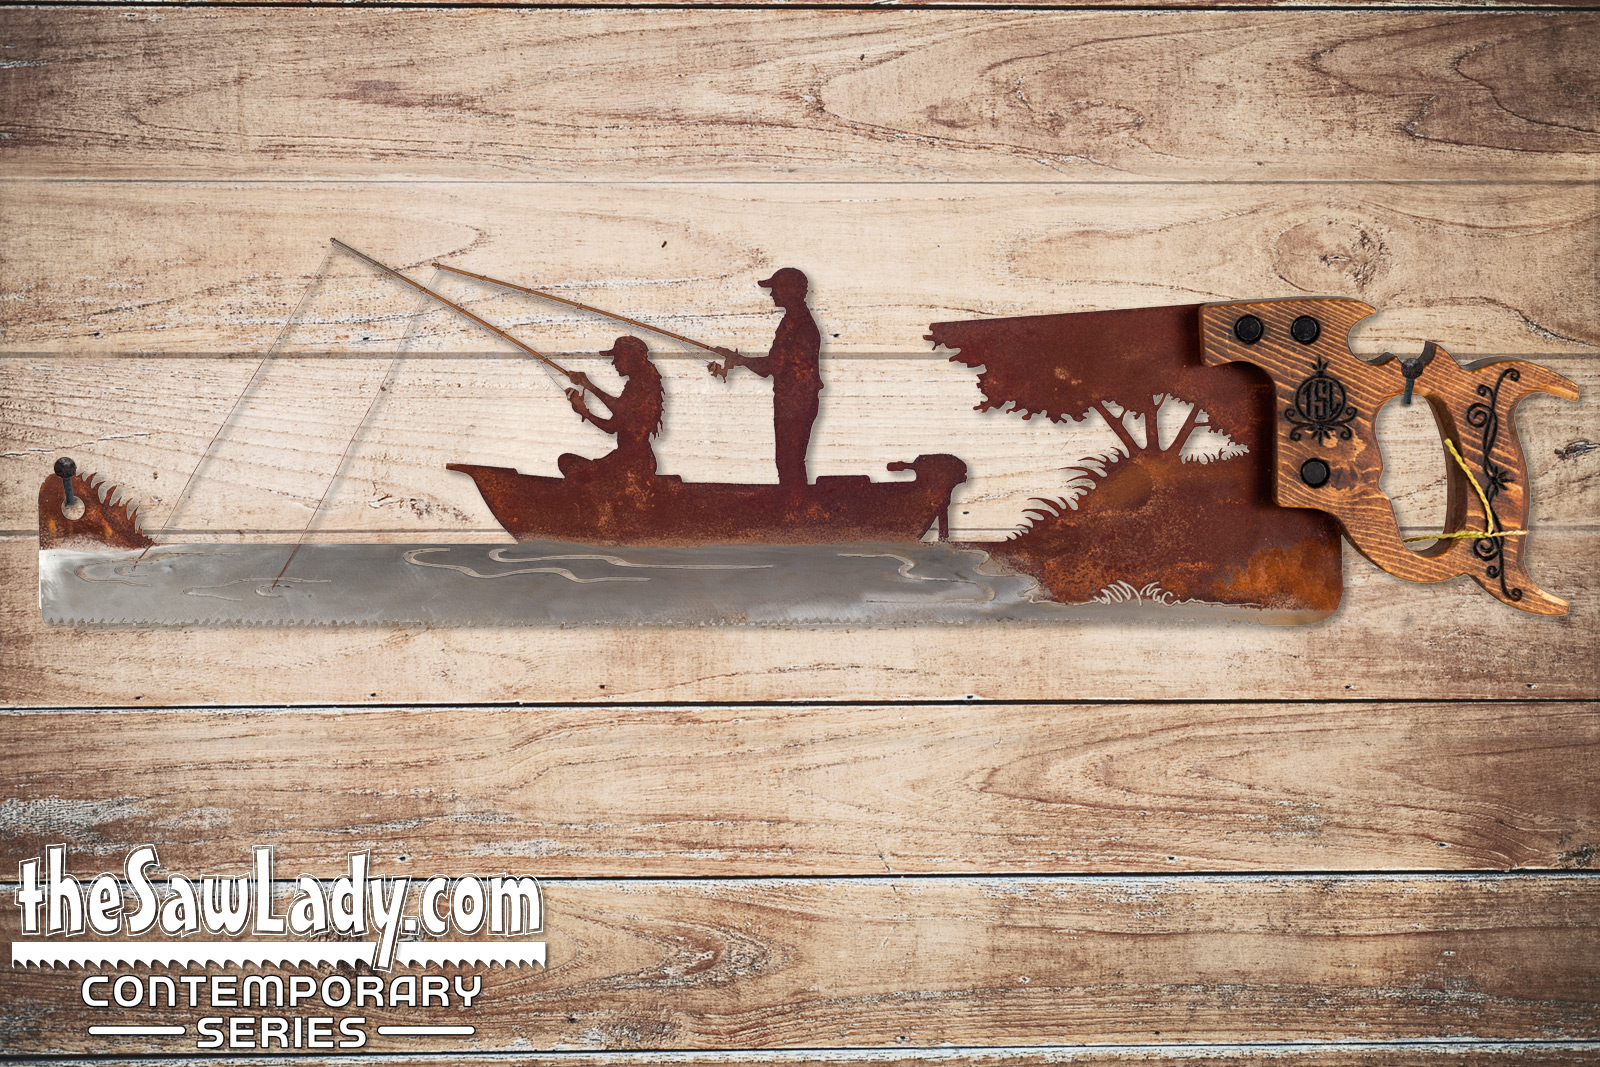 man-woman-fishing-boat-metal-wall-saw-art